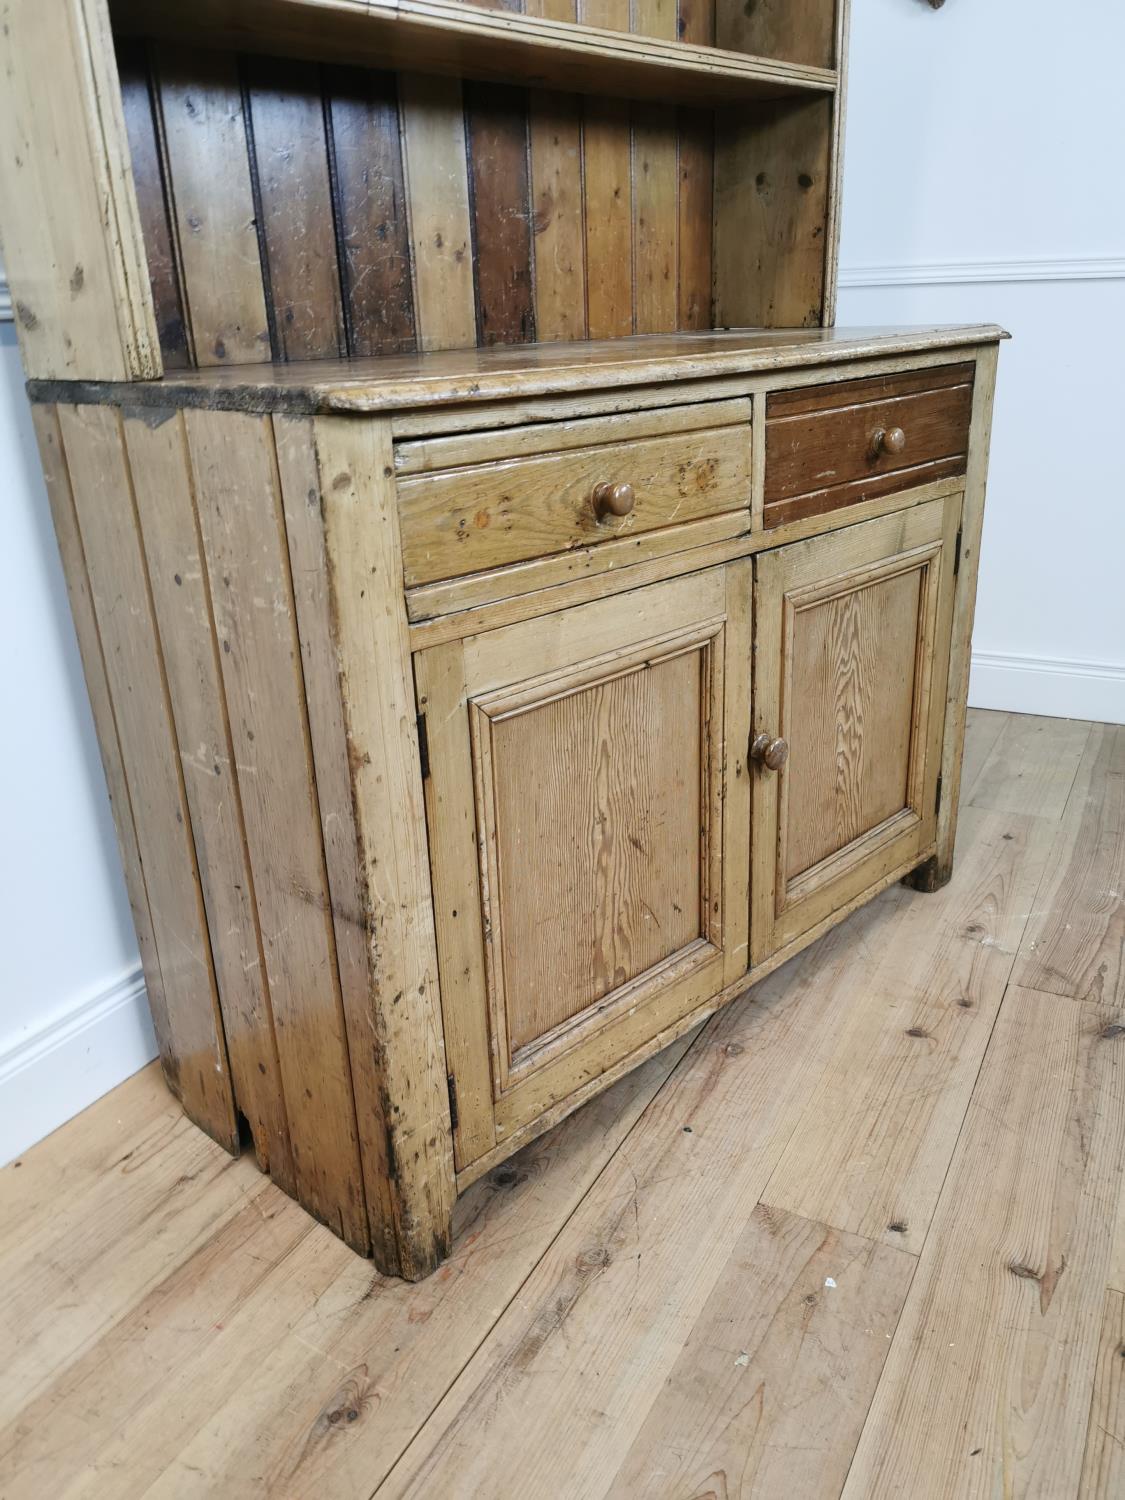 19th C. Irish pine kitchen dresser with open shelves - Image 2 of 7